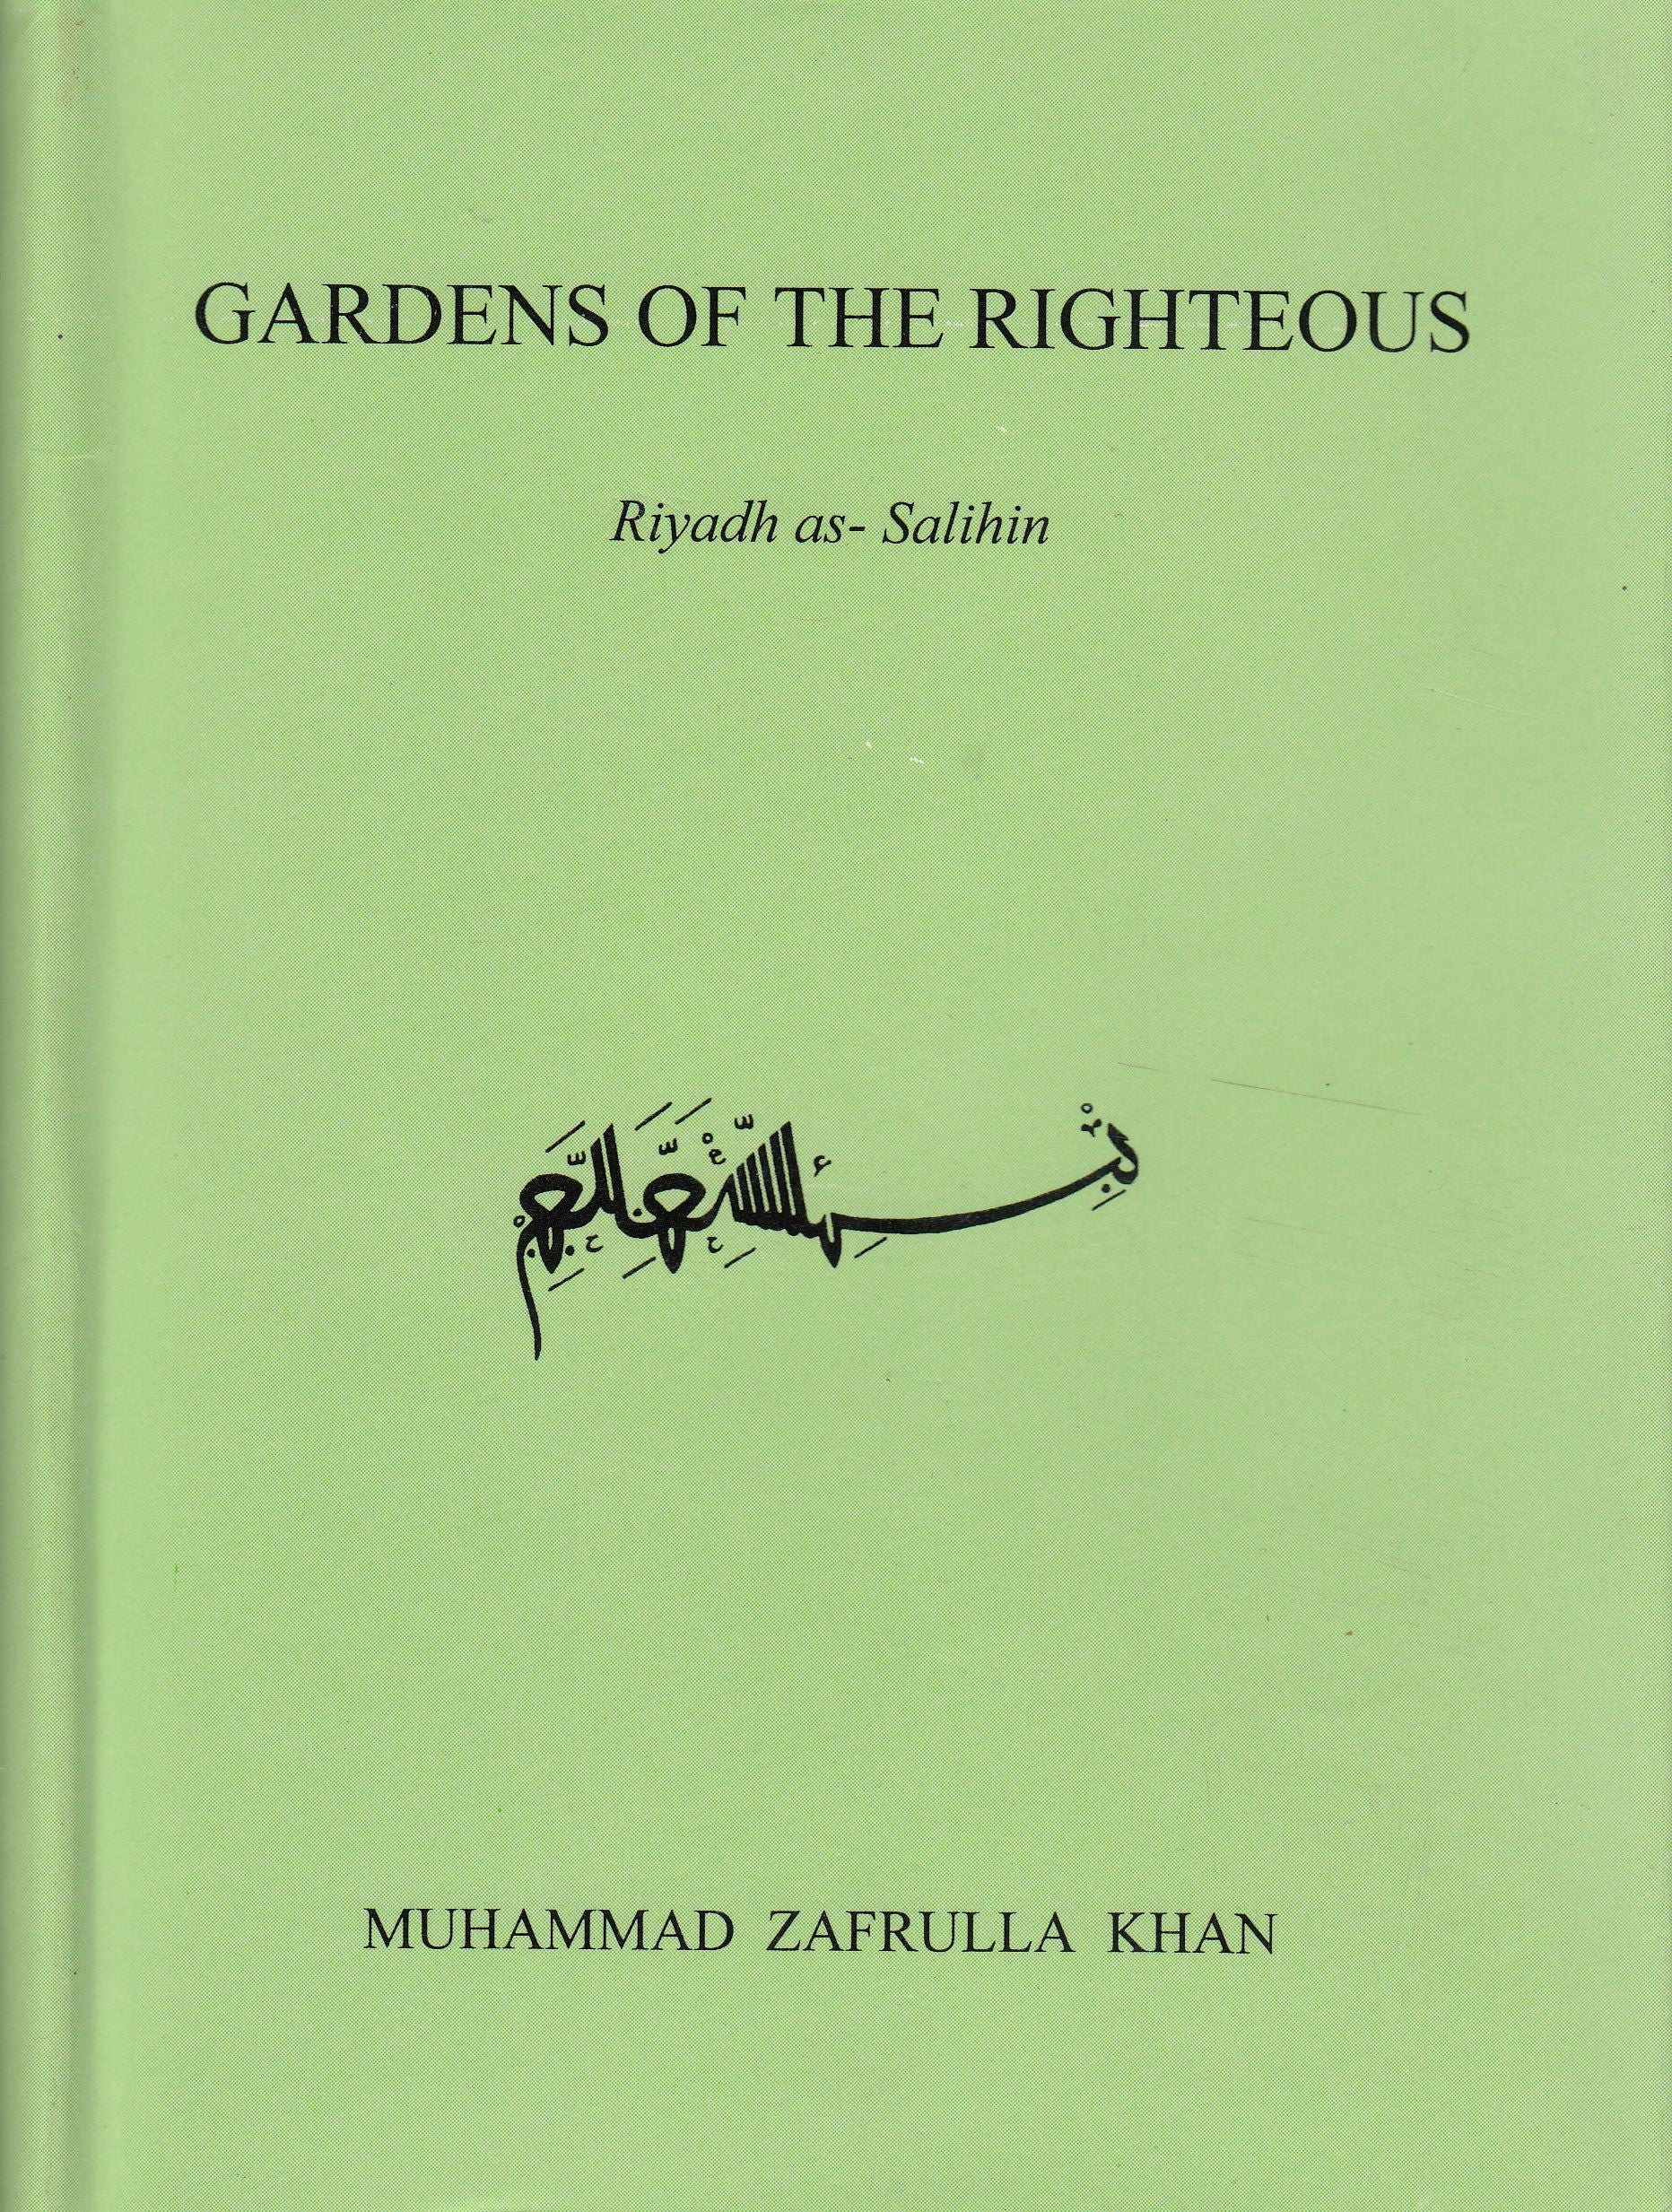 Gardens of the Righteous - Riyadh as-Salihin (English only)